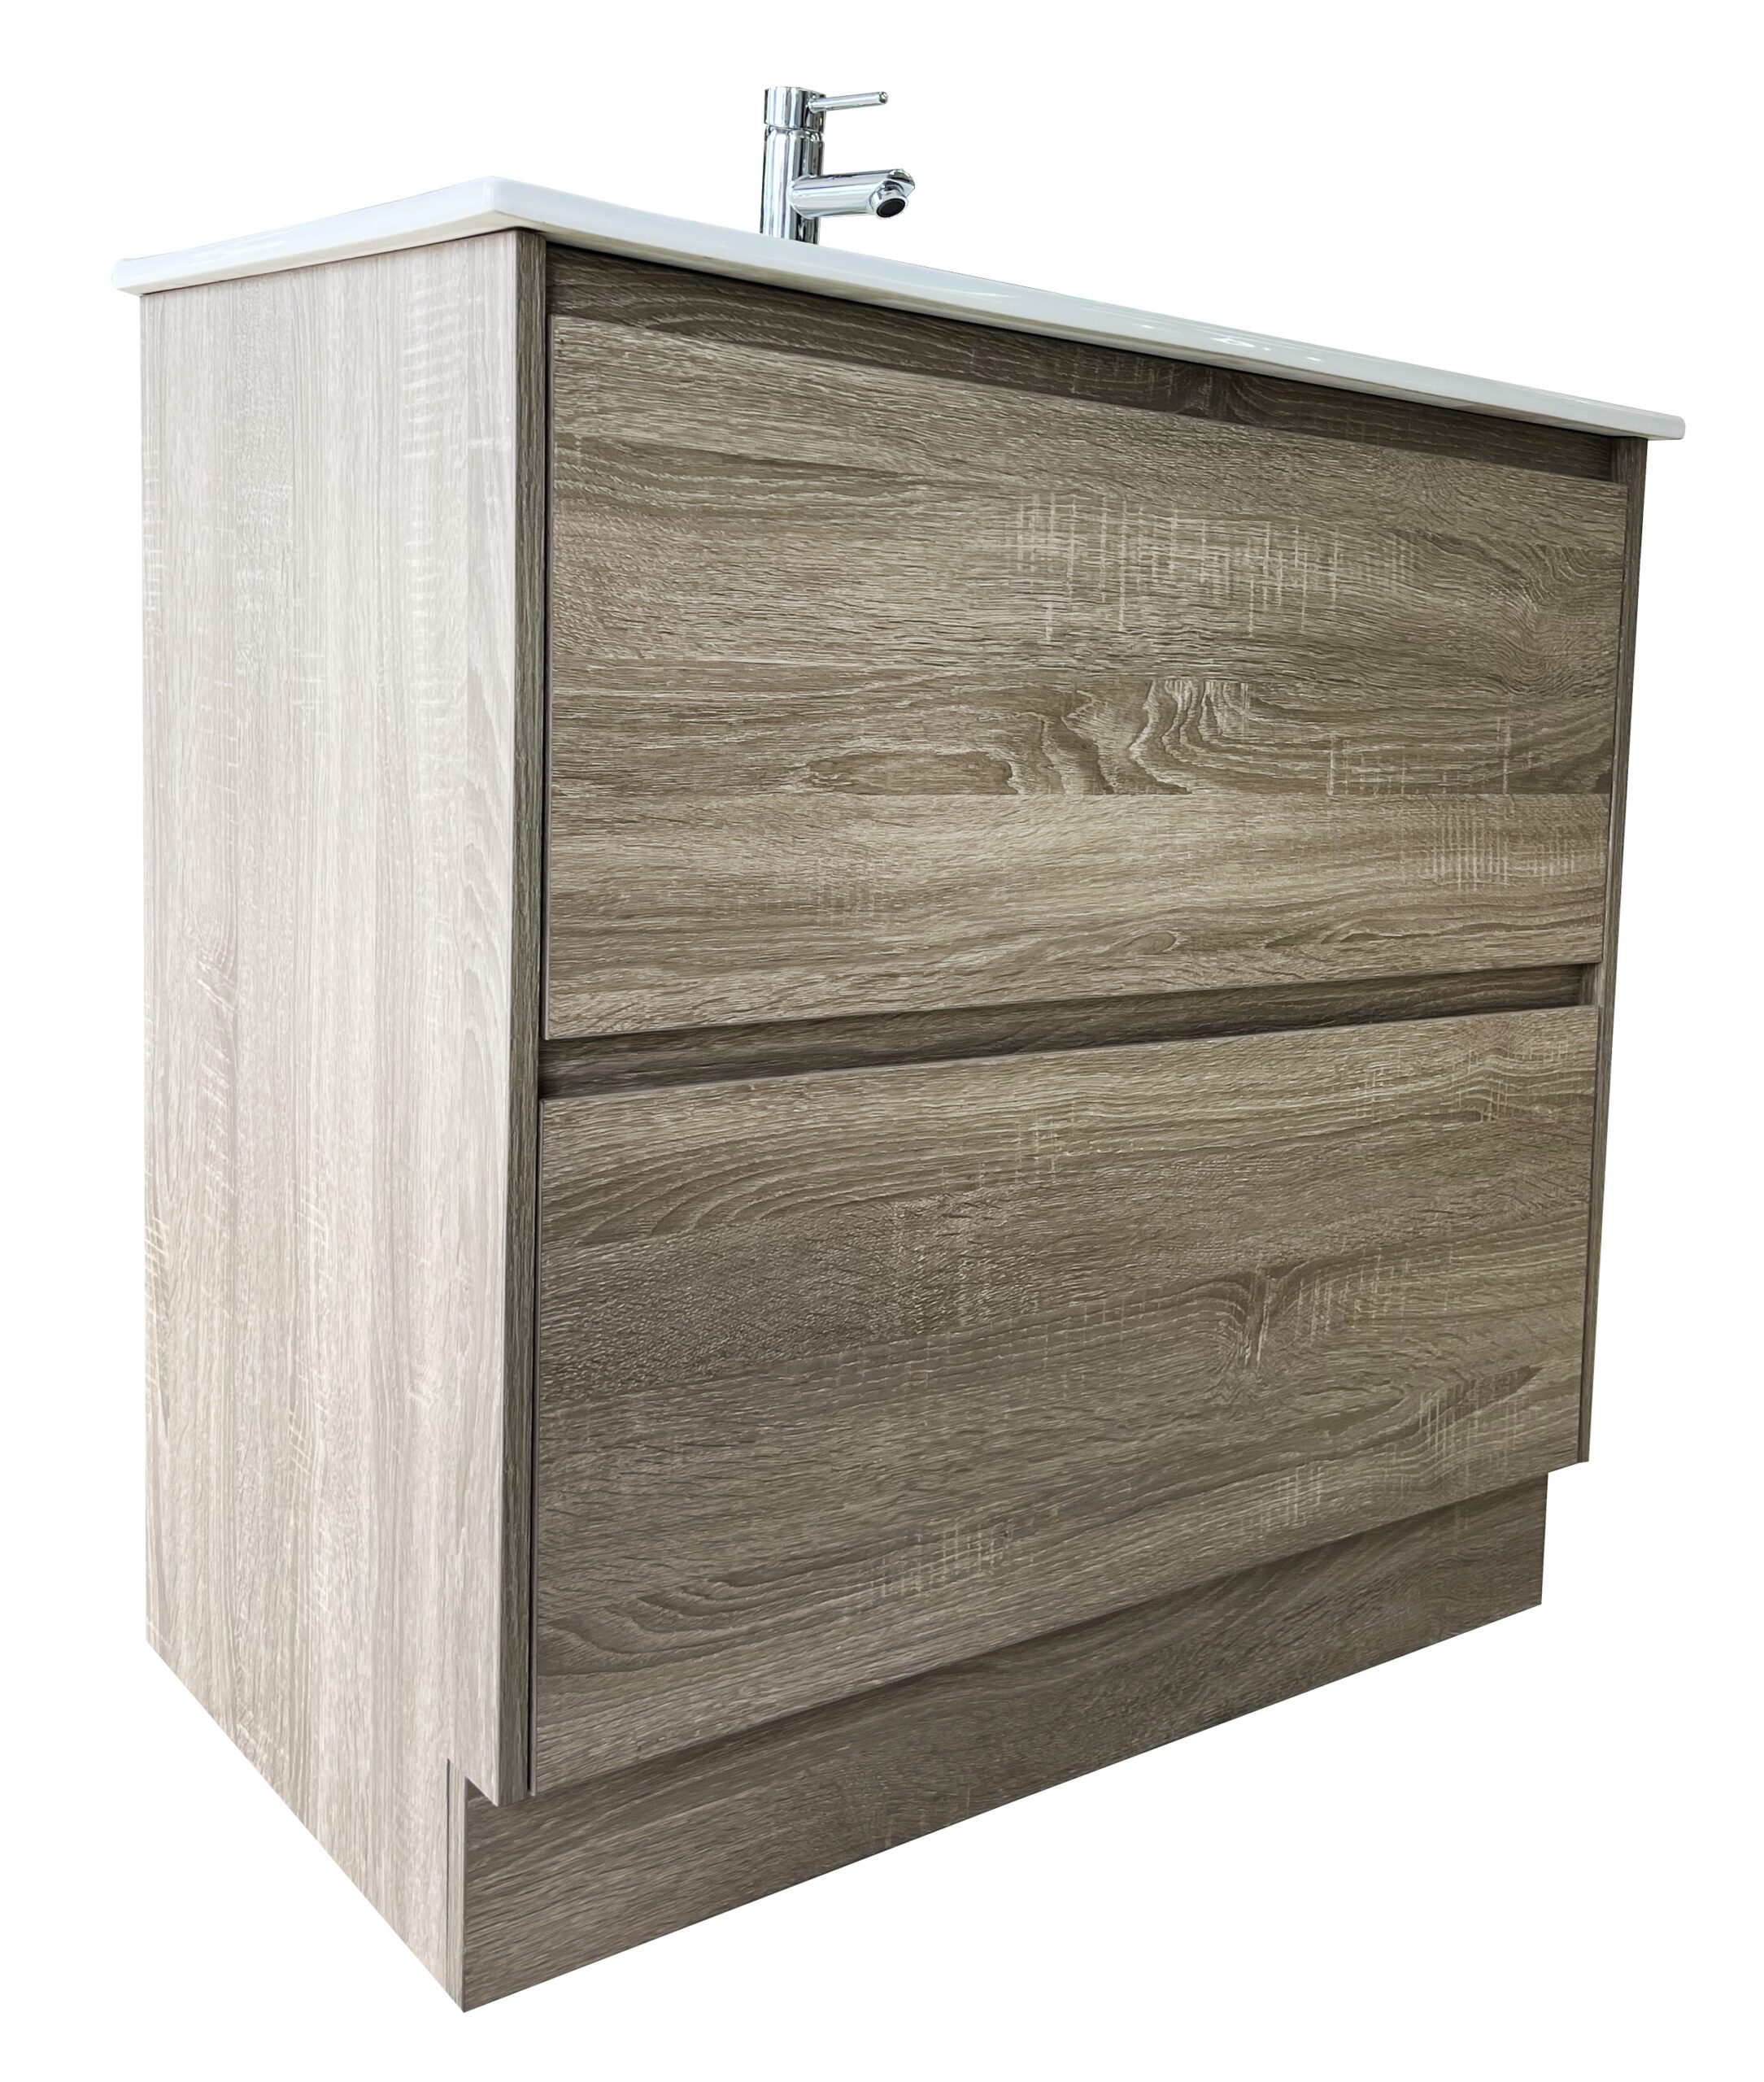 PS750fs-m12 woodgrain plywood floorstanding vanity light brown